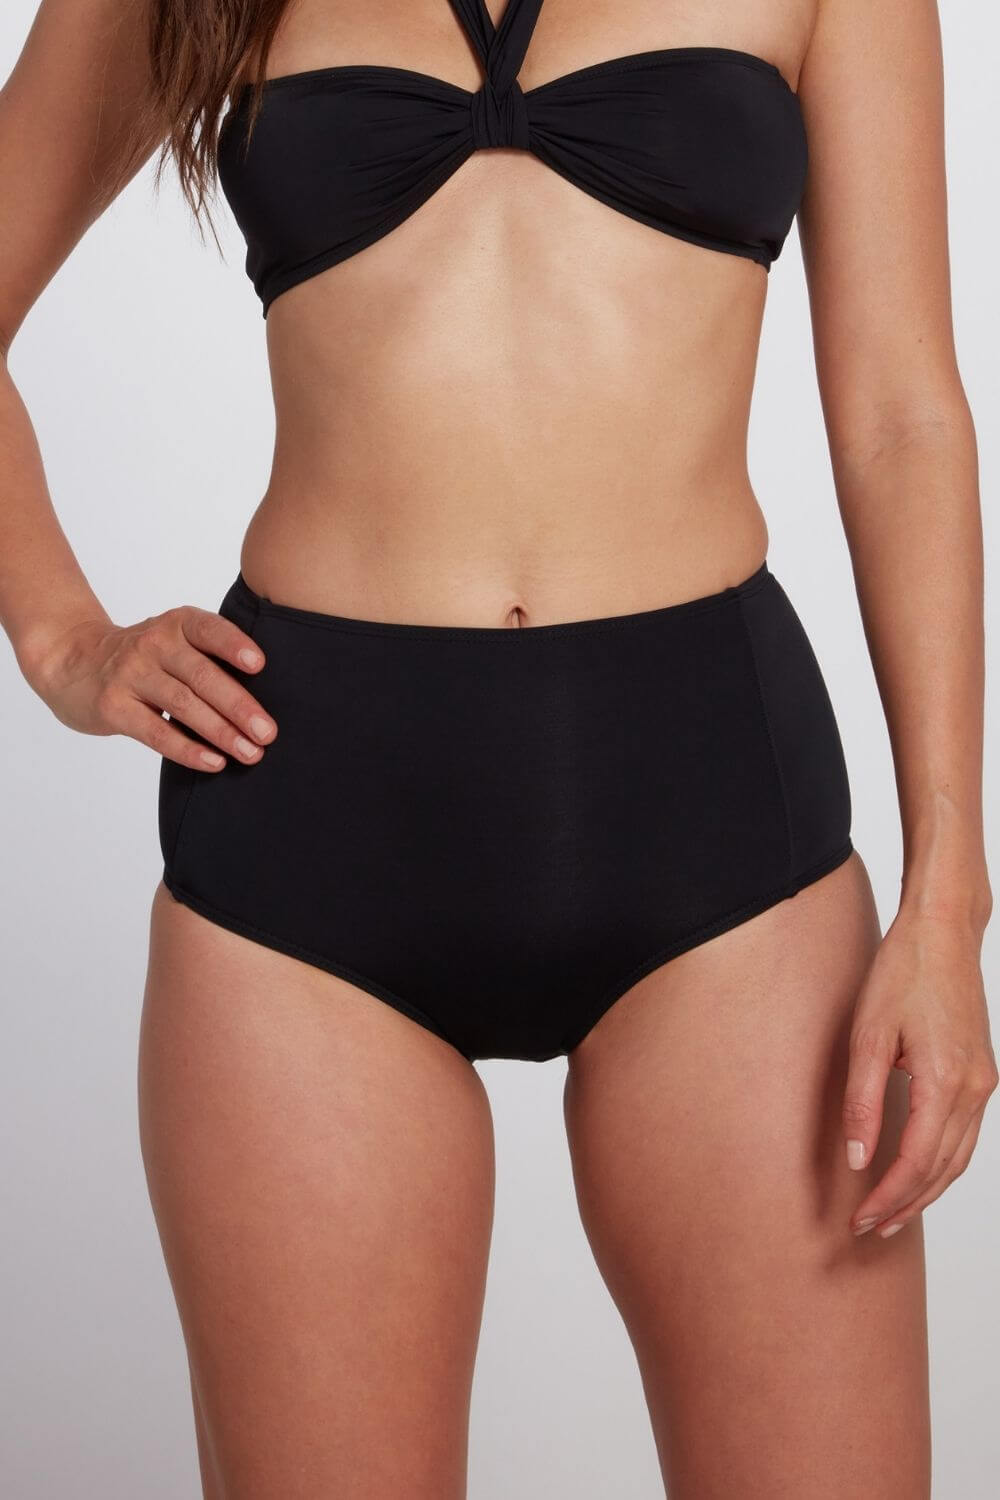 Reversible Strapless Bandeau Bikini Top with Pads - Sauipe Swim